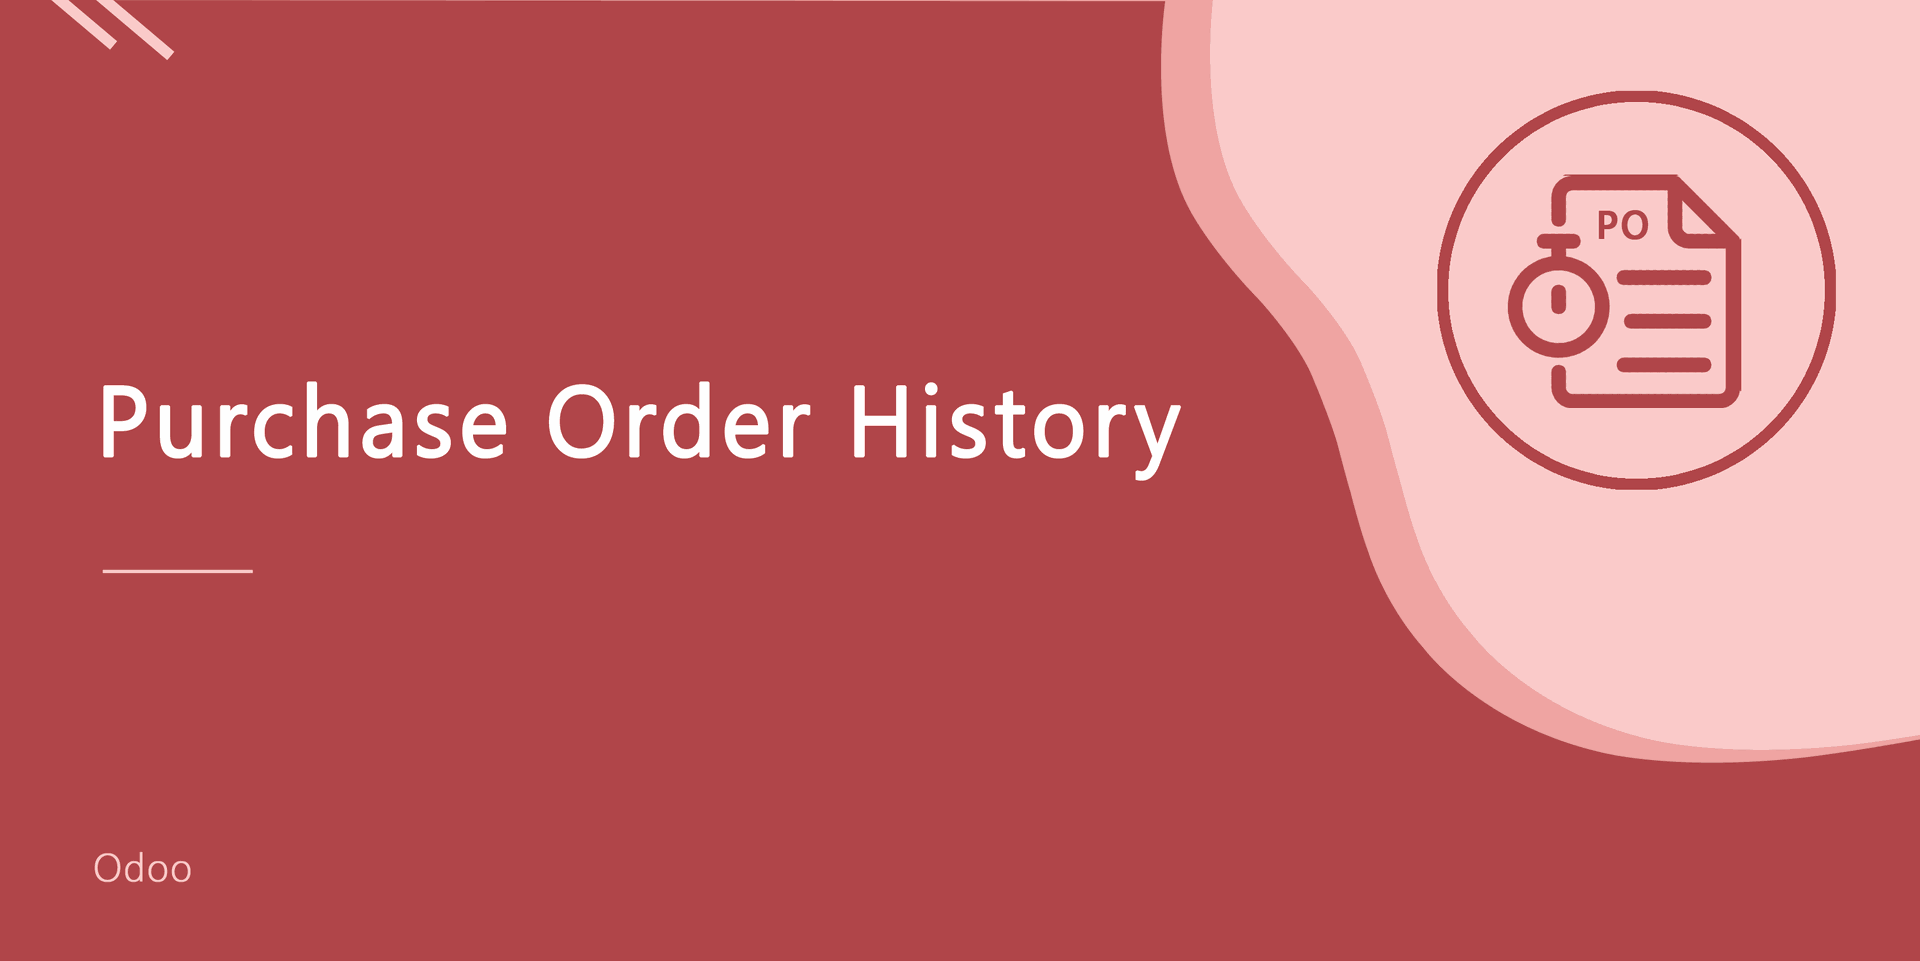 Vendor Purchase Order History
